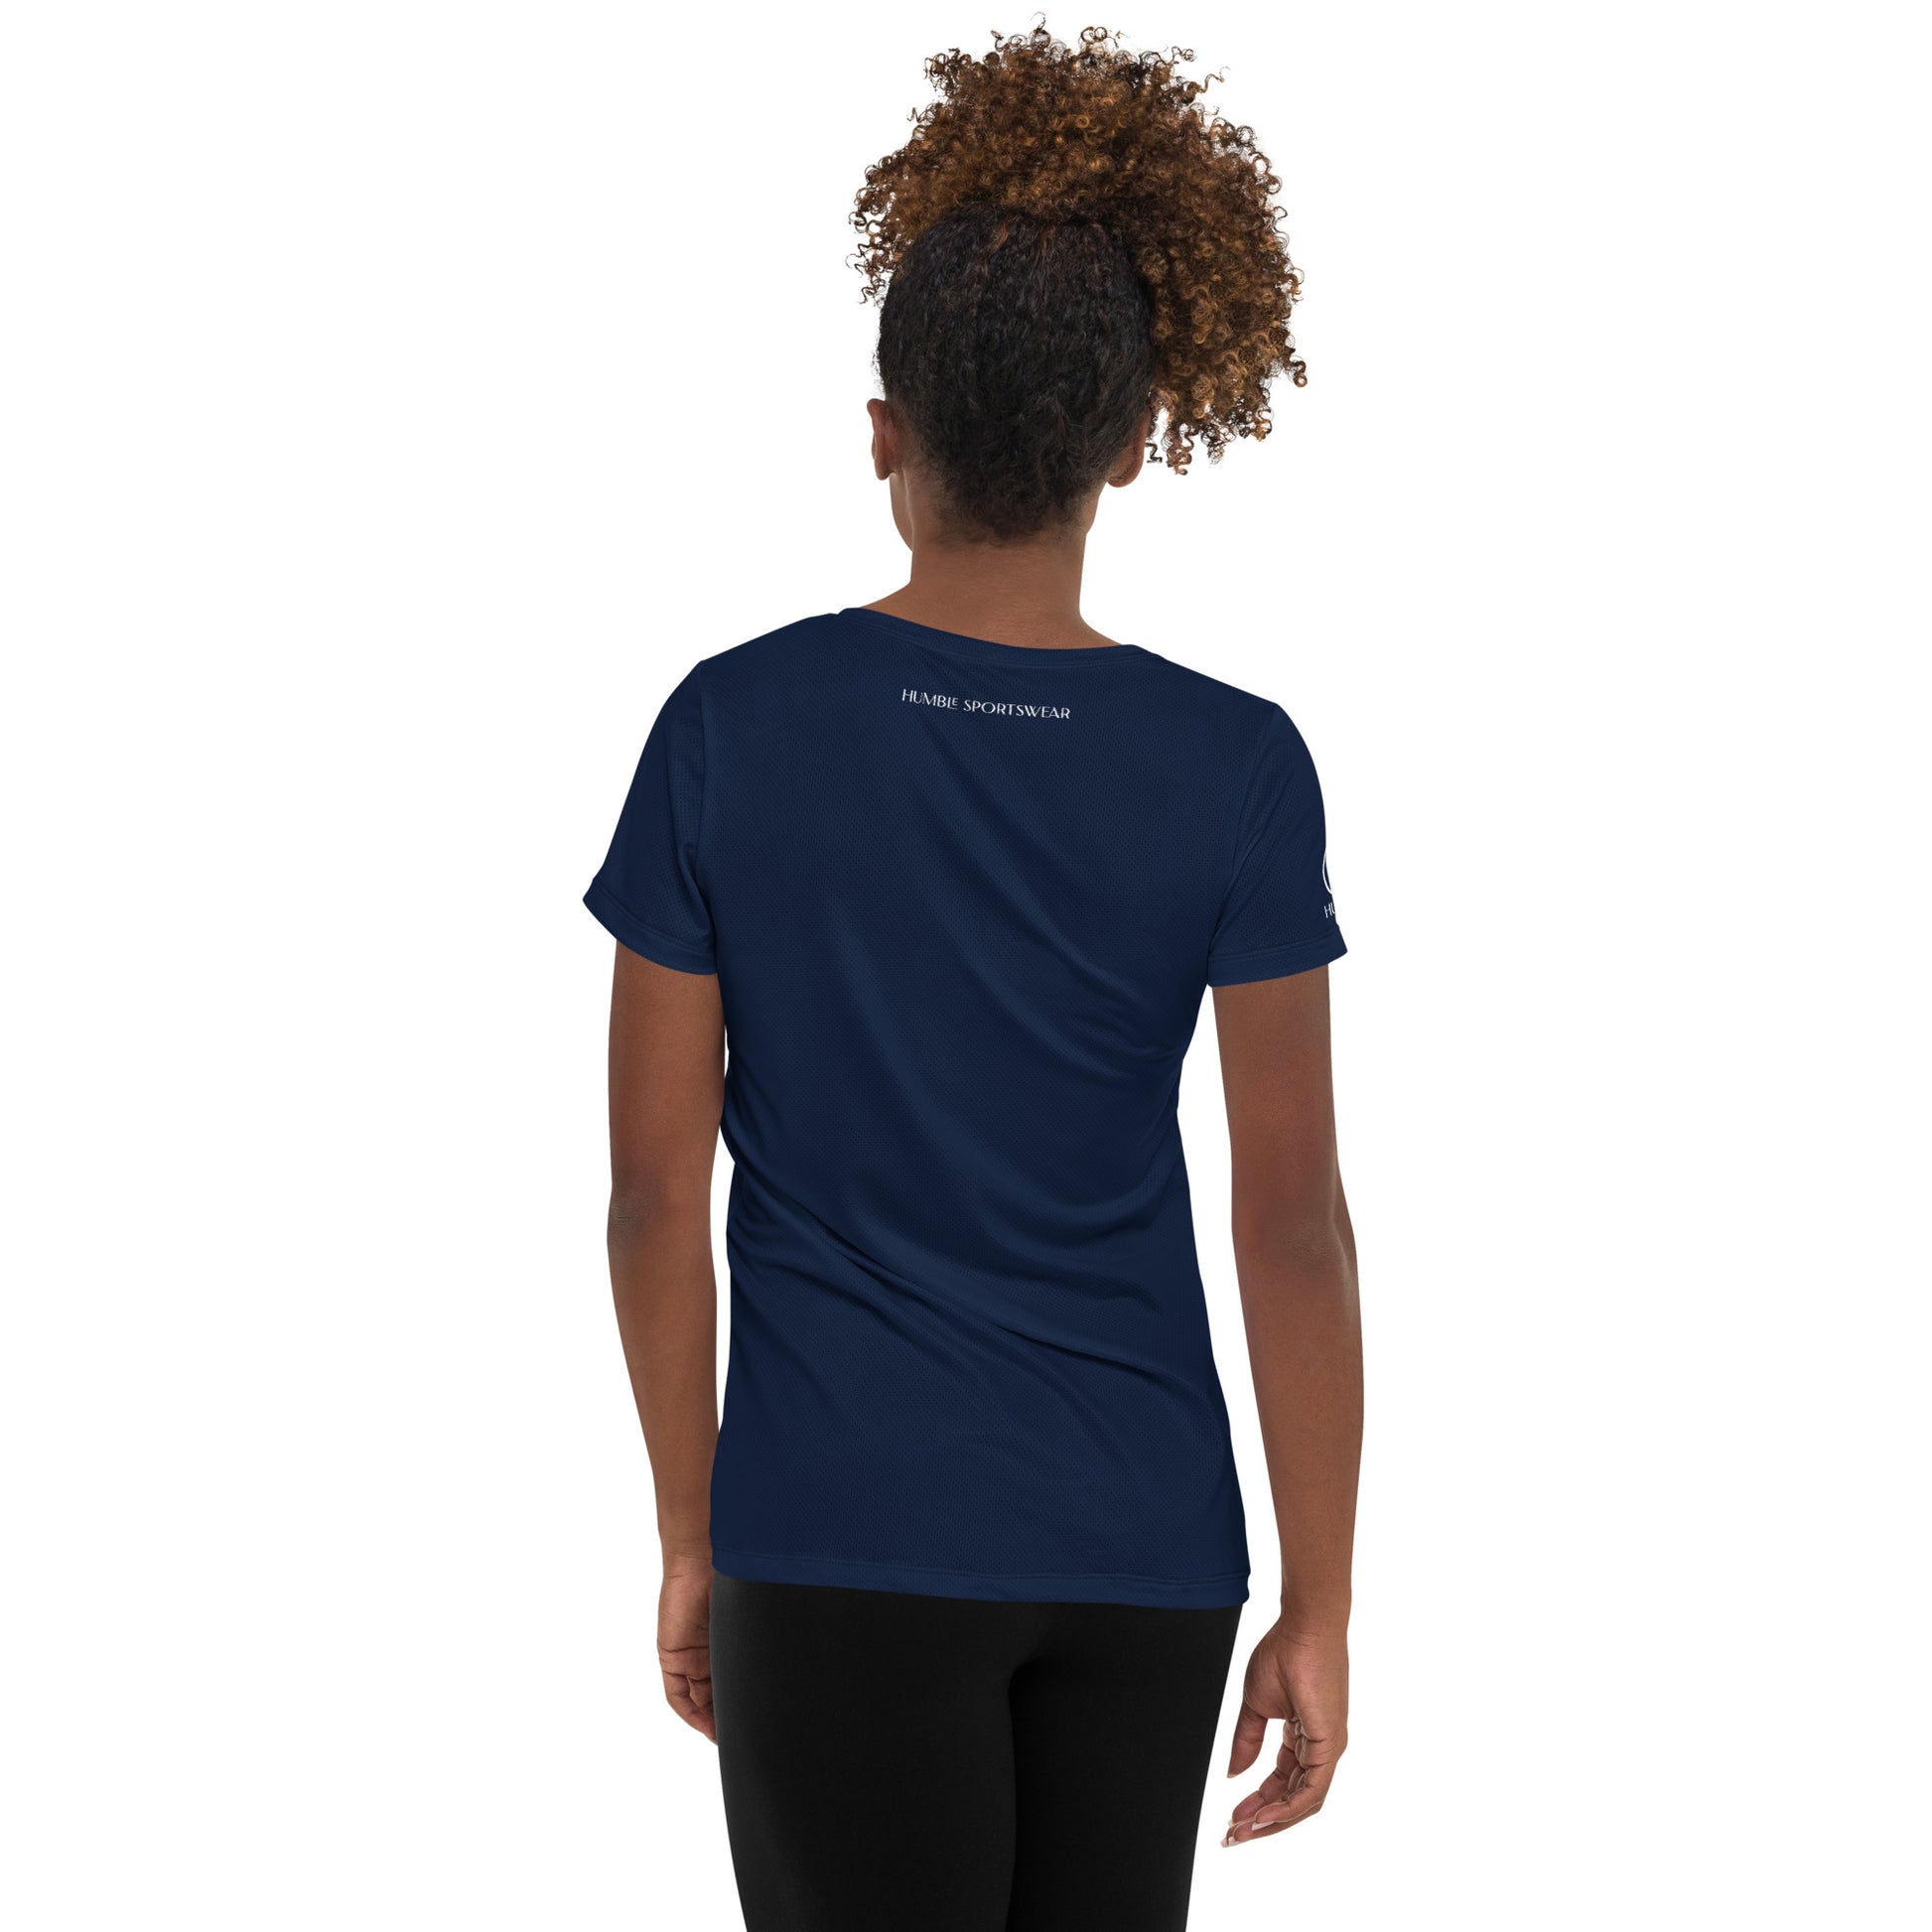 Humble Sportswear™ Women's Navy MaxDri T-Shirt - Mireille Fine Art